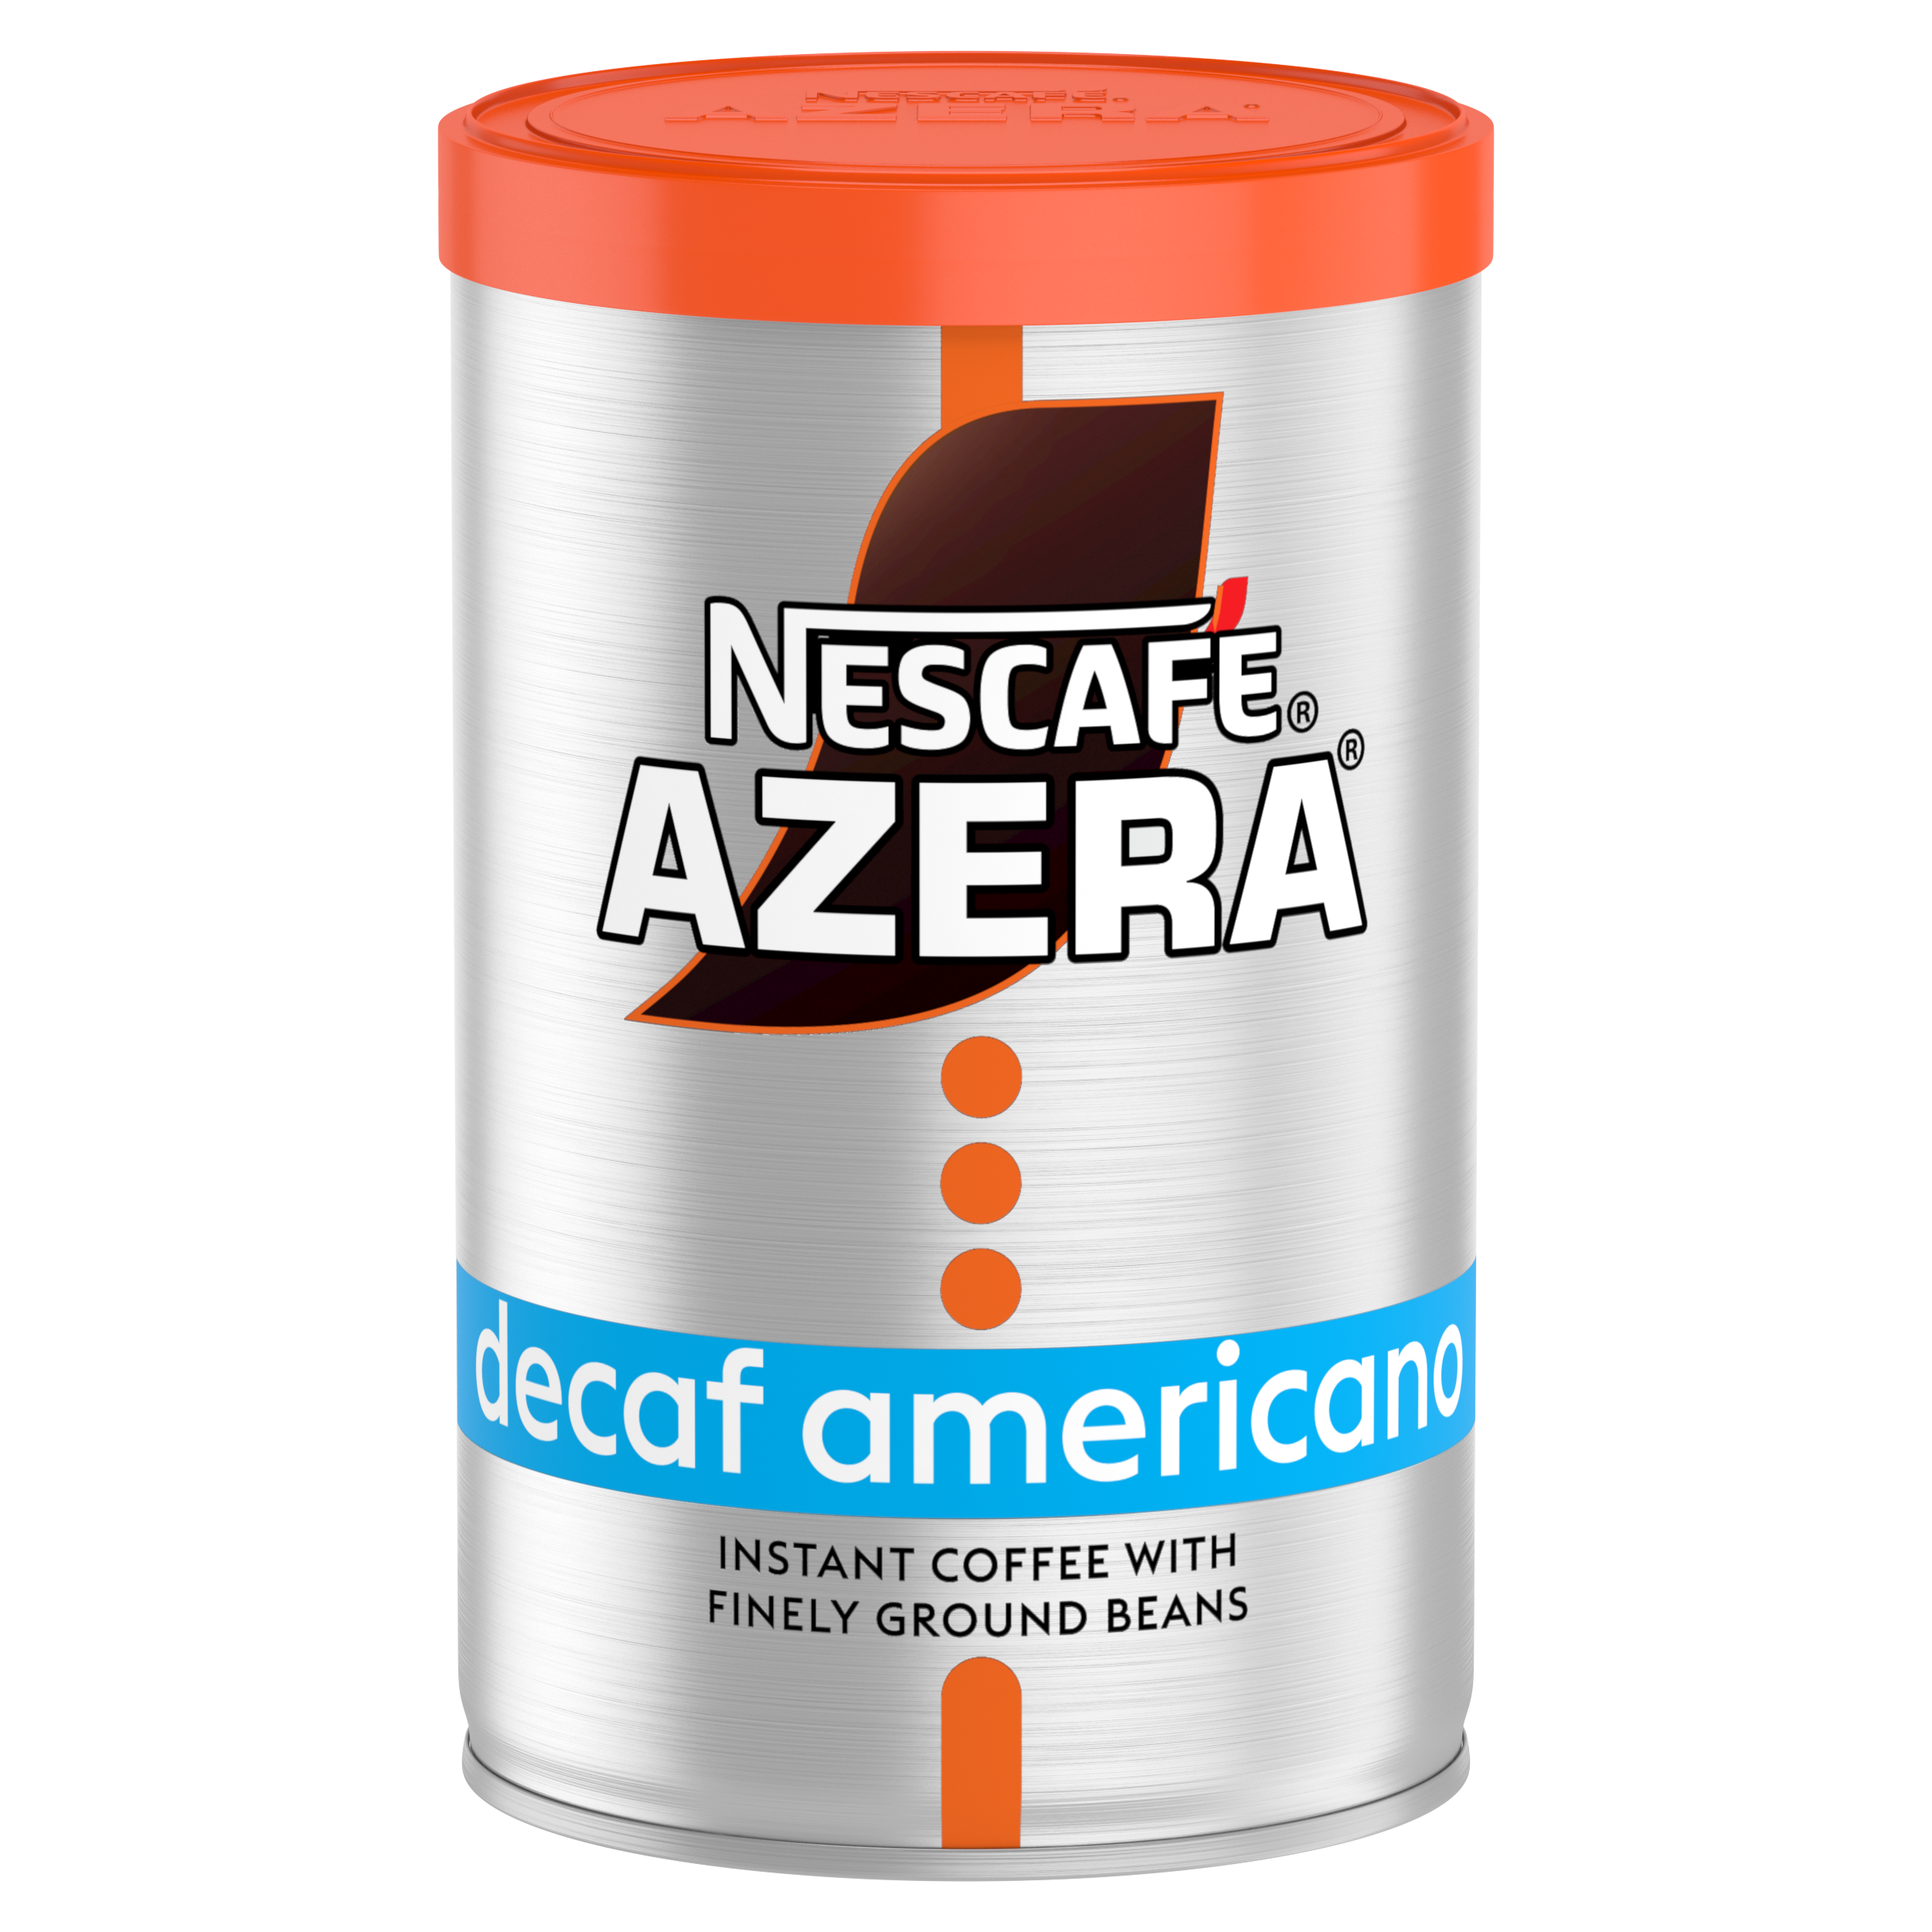 Nescafe Azera Decaf